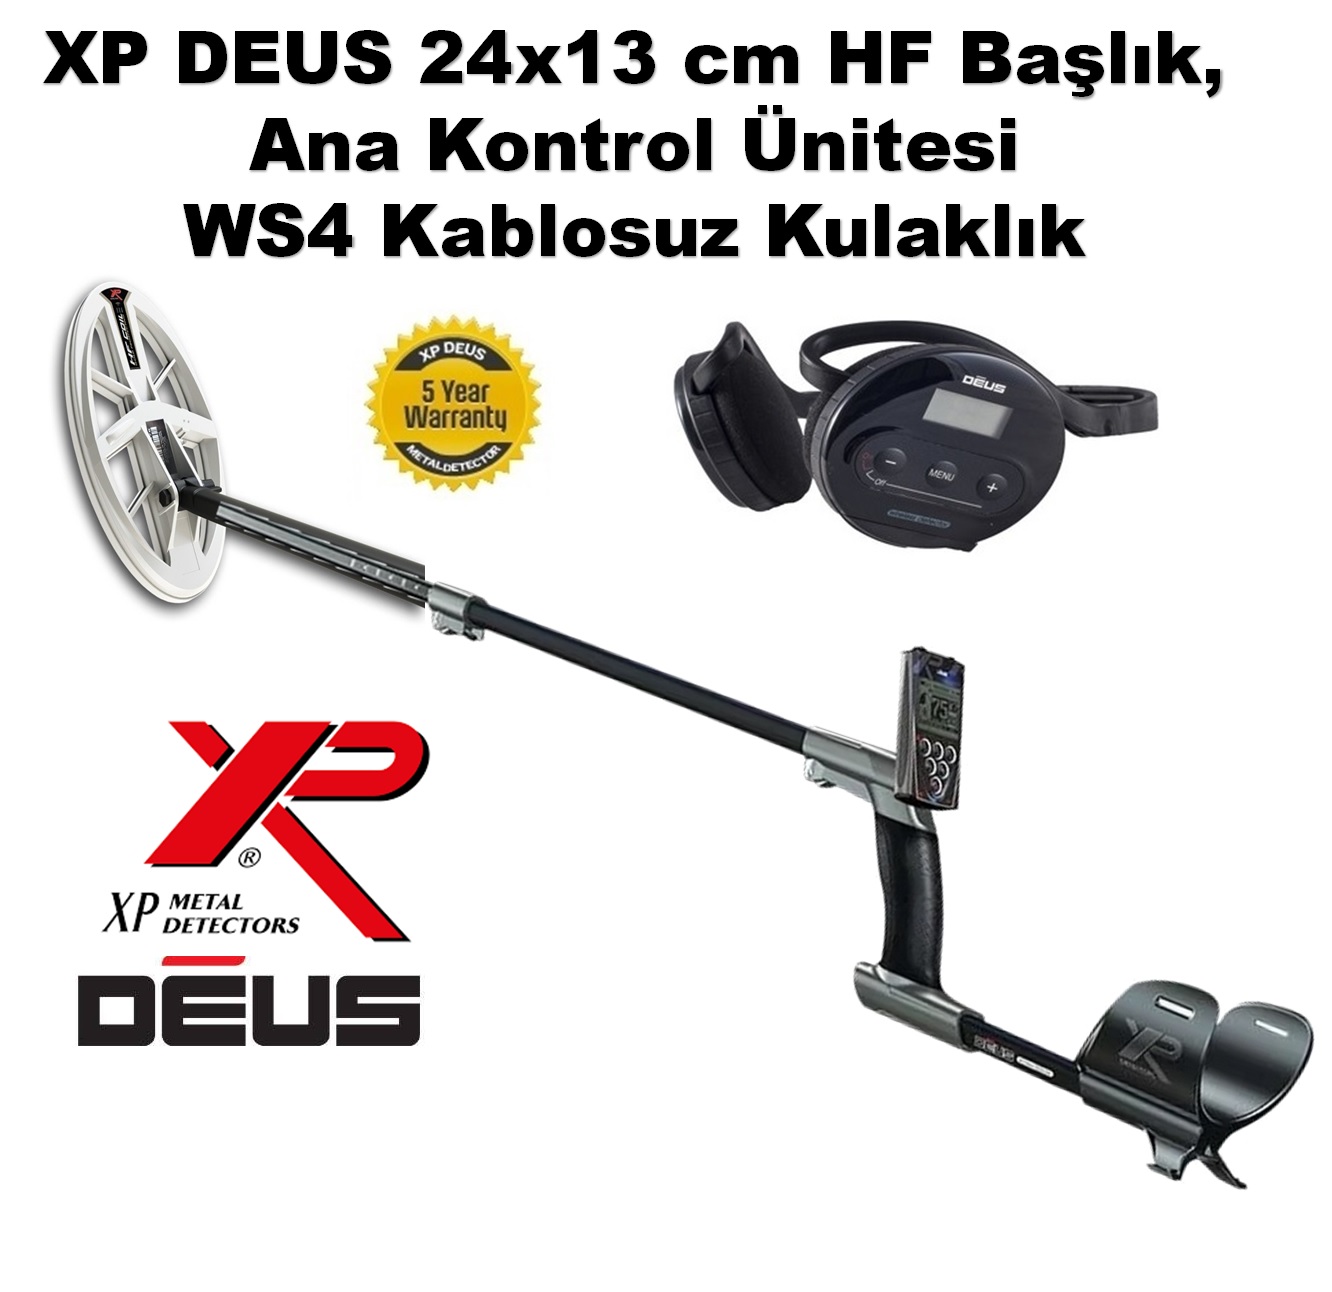 XP DEUS - 24x13cm HF Başlık, Ana Kontrol Ünitesi (RC), WS4 Kulaklık, FULL PAKET